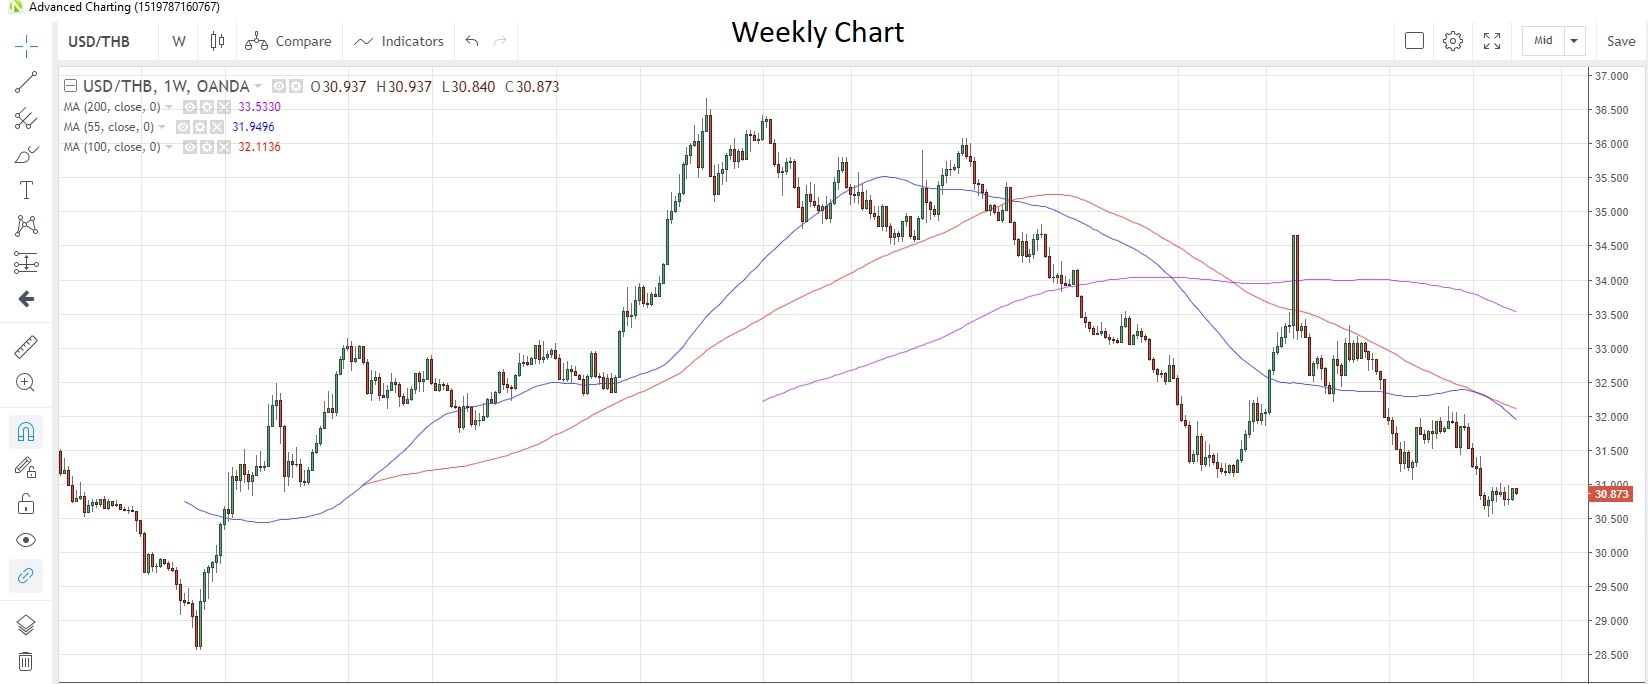 USD/THB Weekly Chart